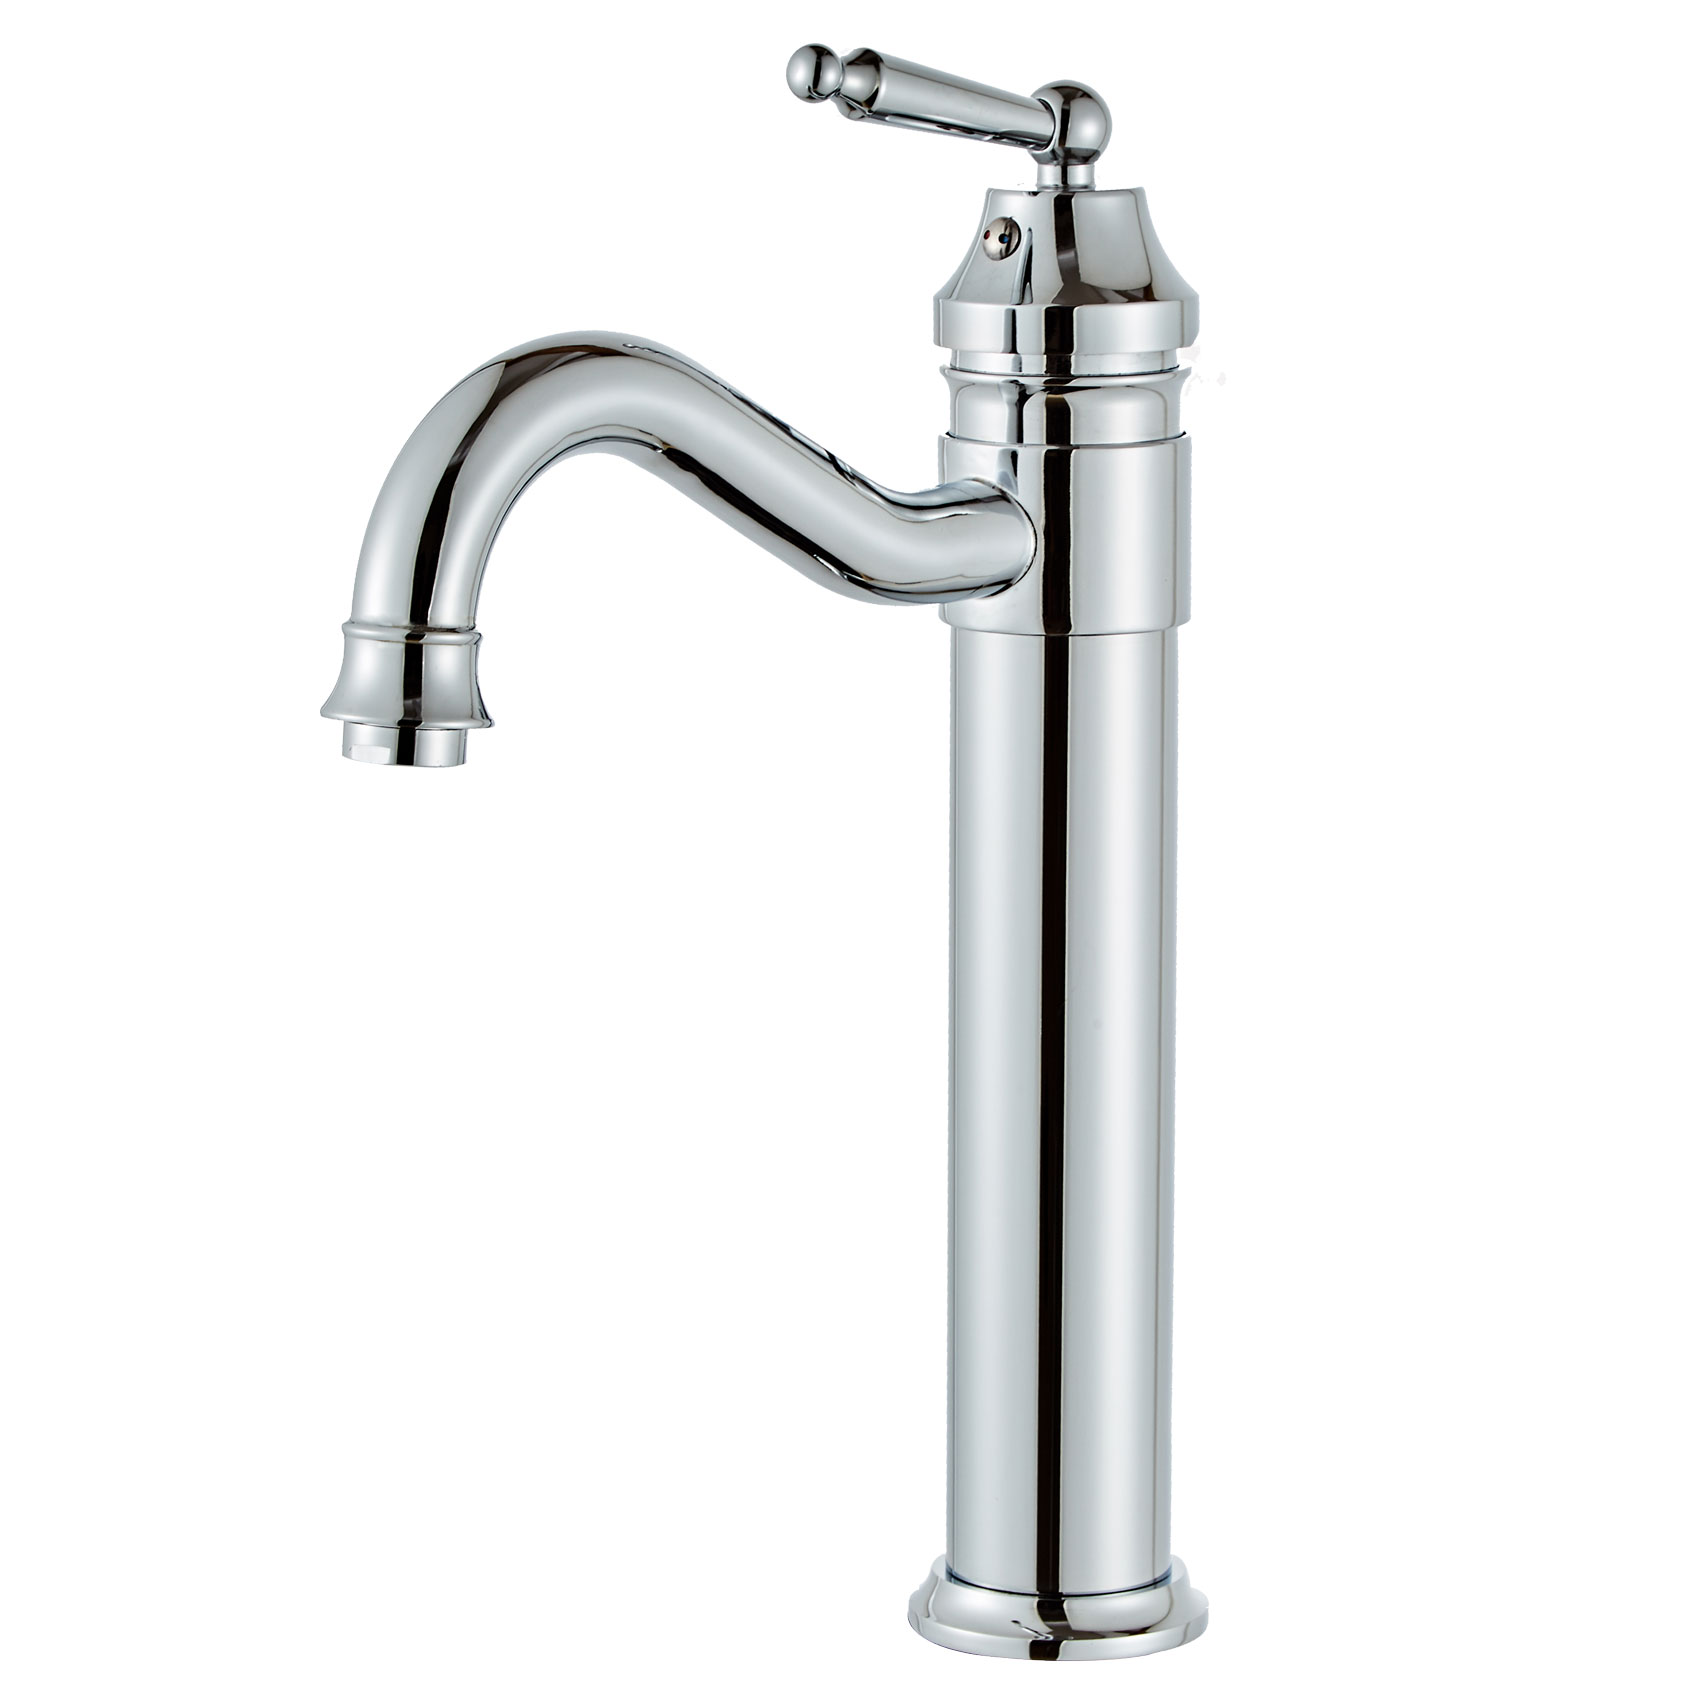 Wovier Vessel Faucet with Supply Hose,Single Handle Single Hole Bathroom Faucet W8299-1